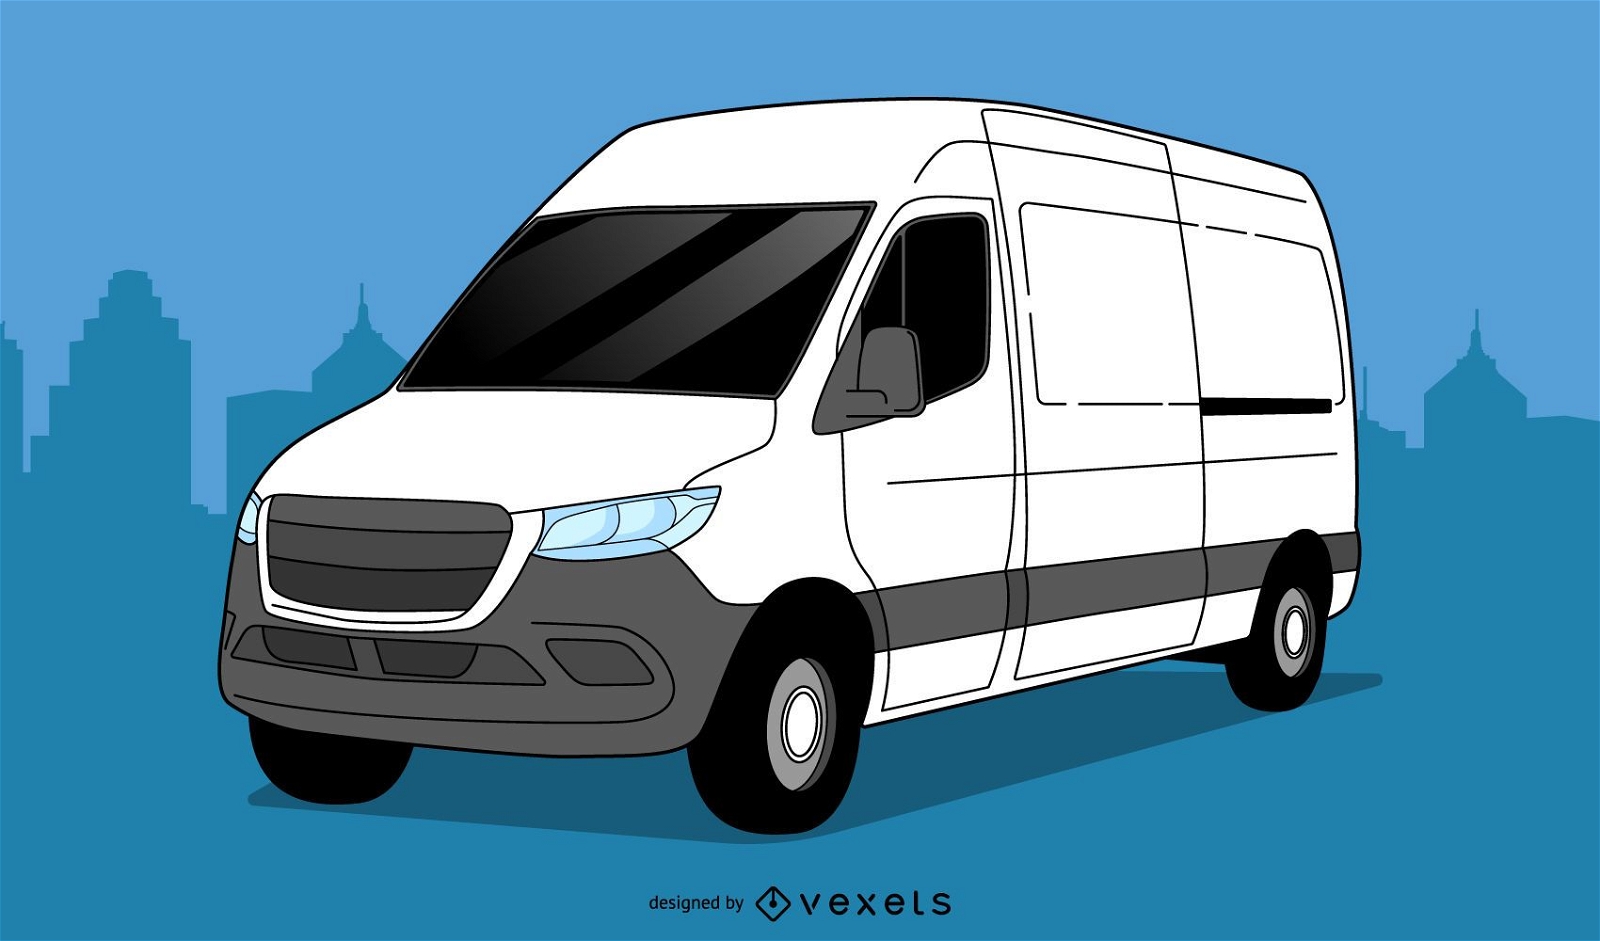 SUV-Van-Illustrationsdesign